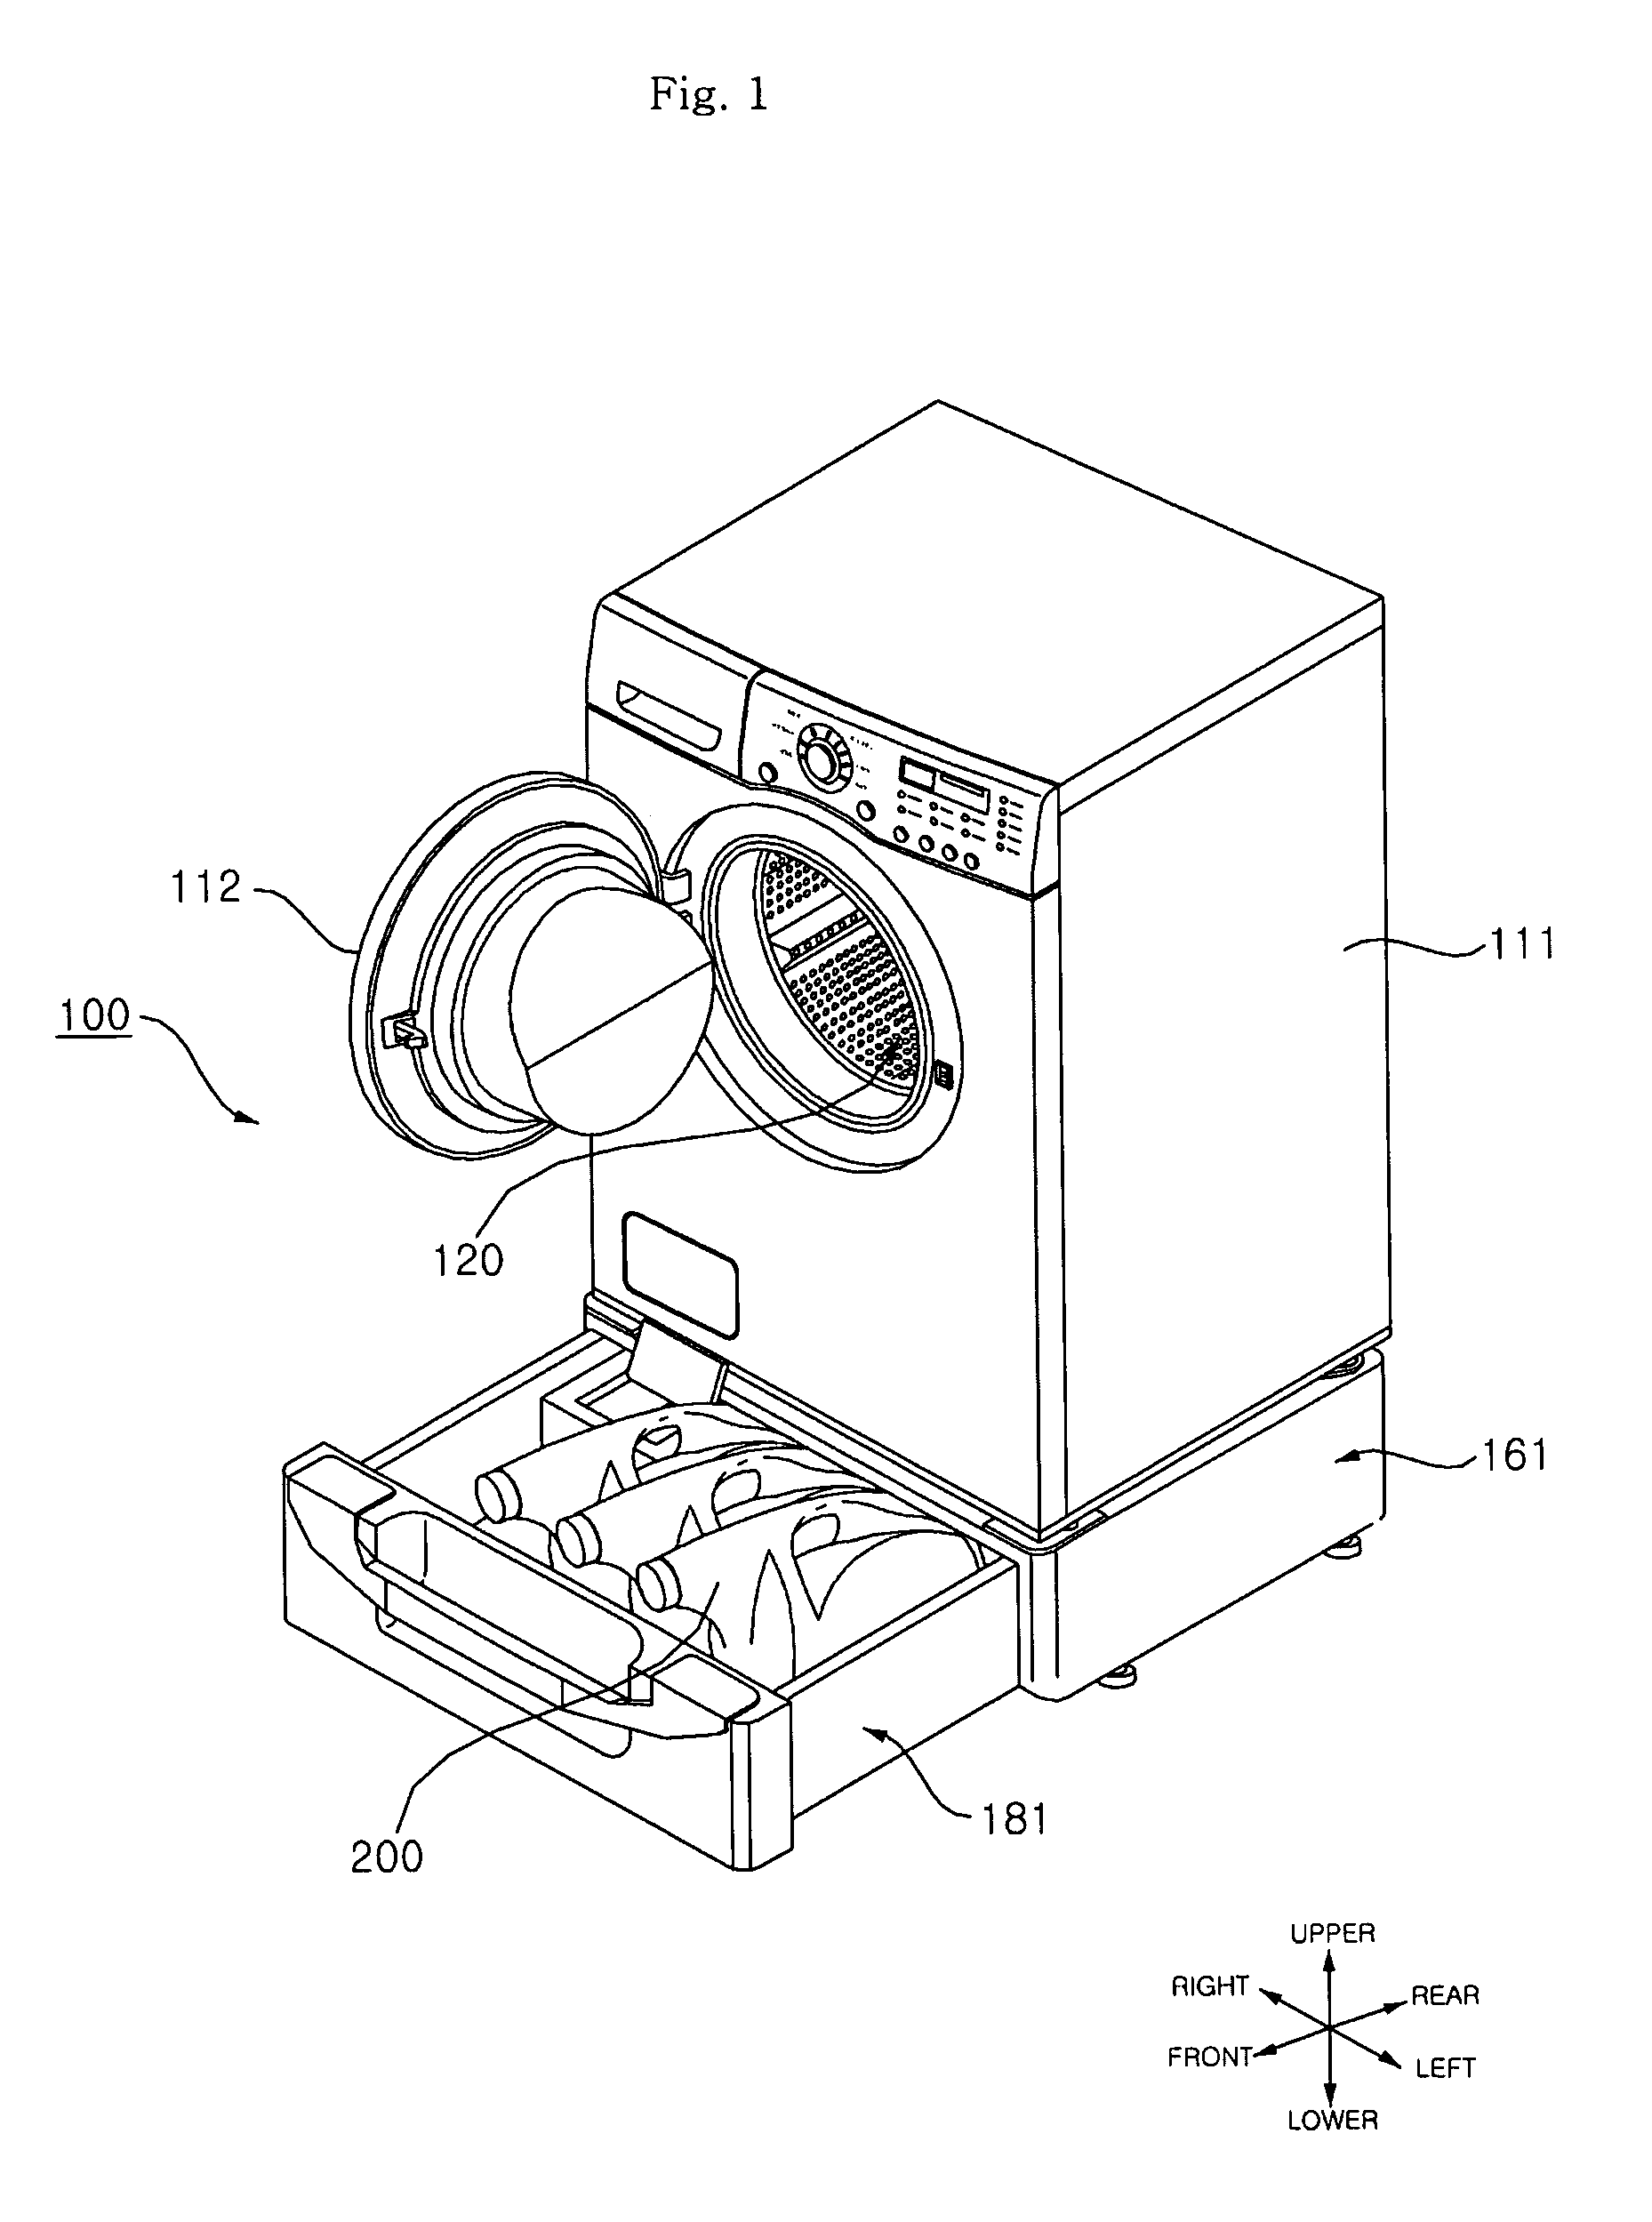 Detergent supply apparatus and washing machine